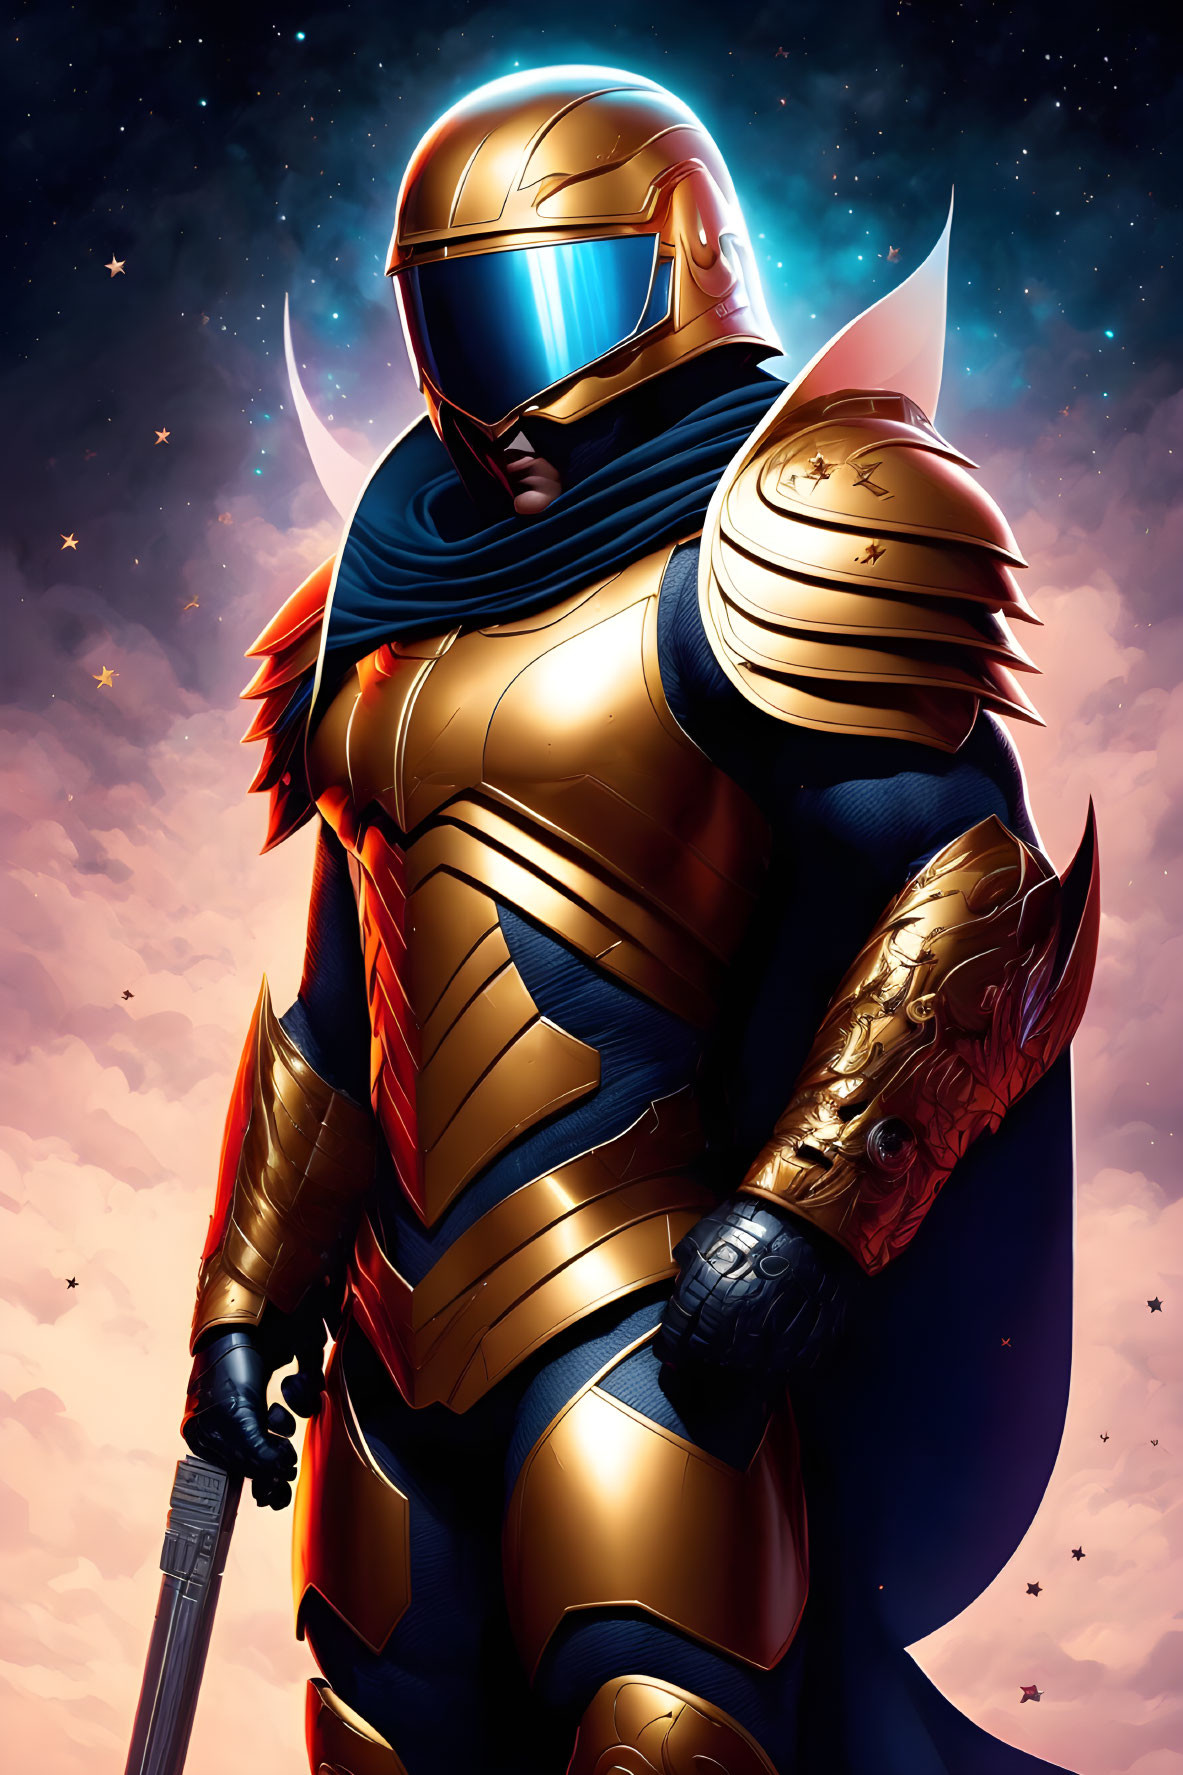 Futuristic knight in golden armor with visor helmet against cosmic backdrop